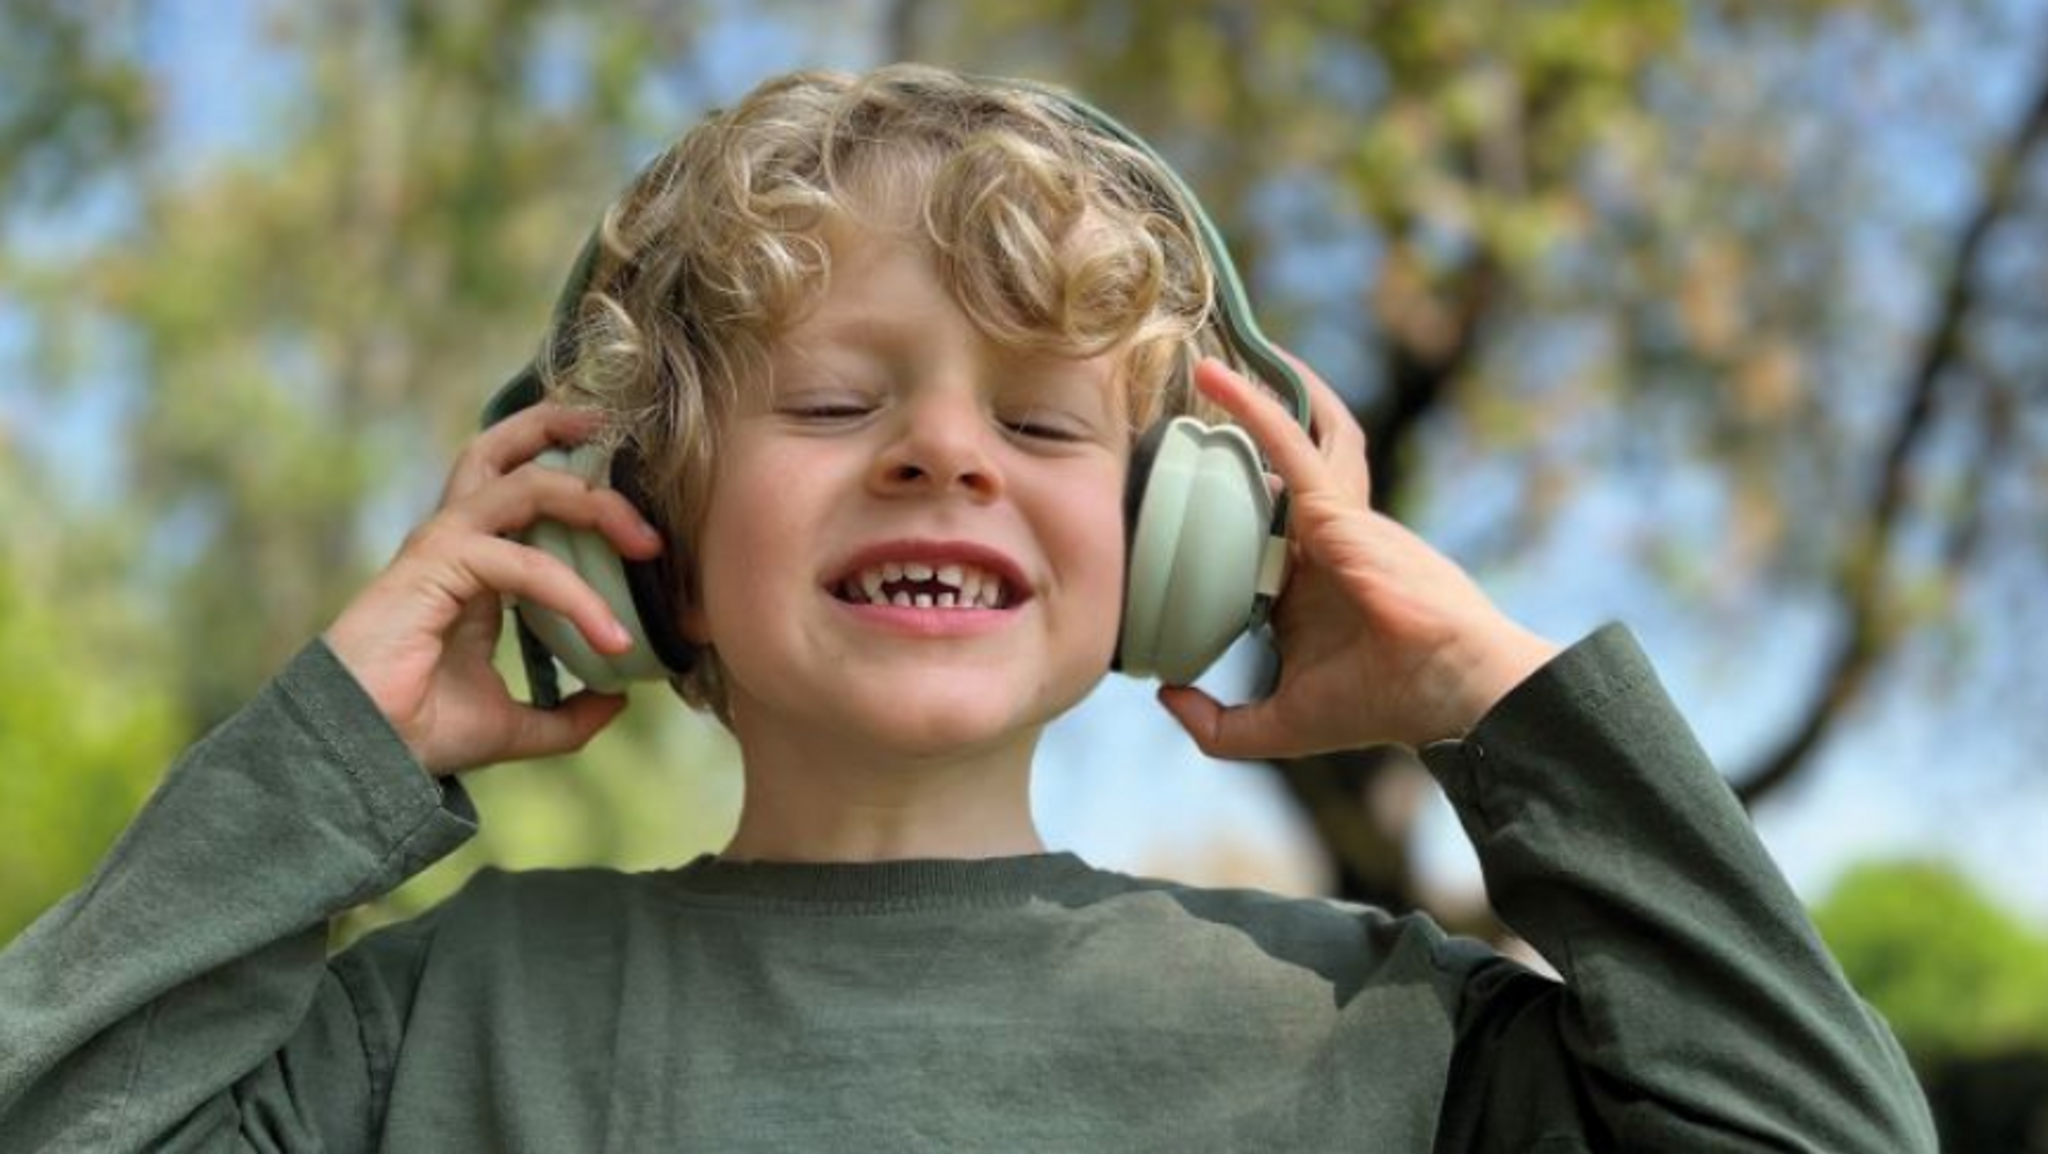 Kibu headphones encourage kids to build and recycle